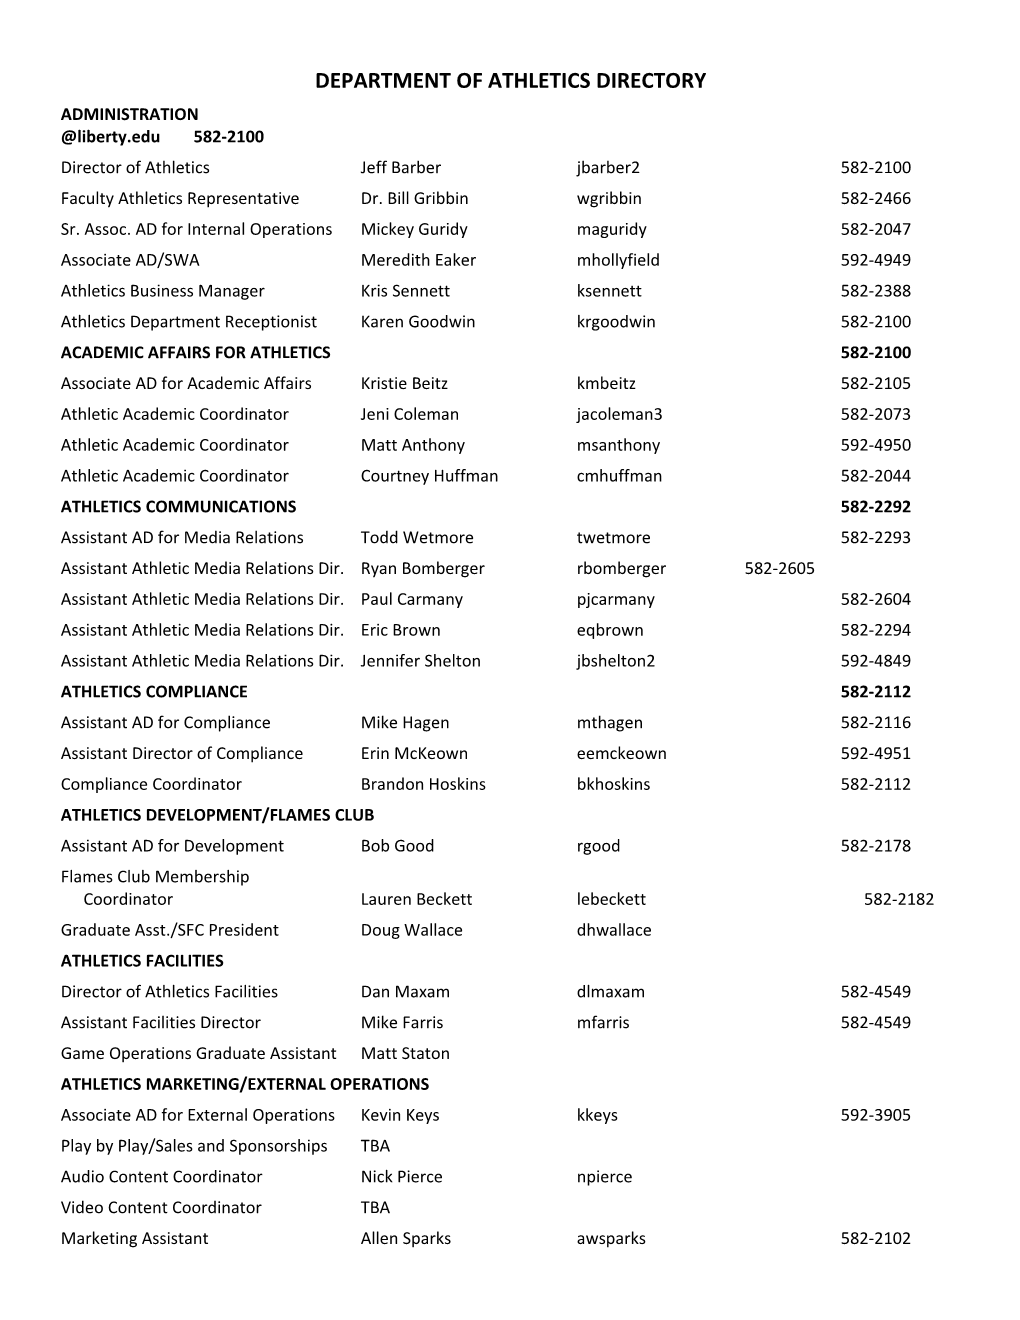 Department of Athletics Directory